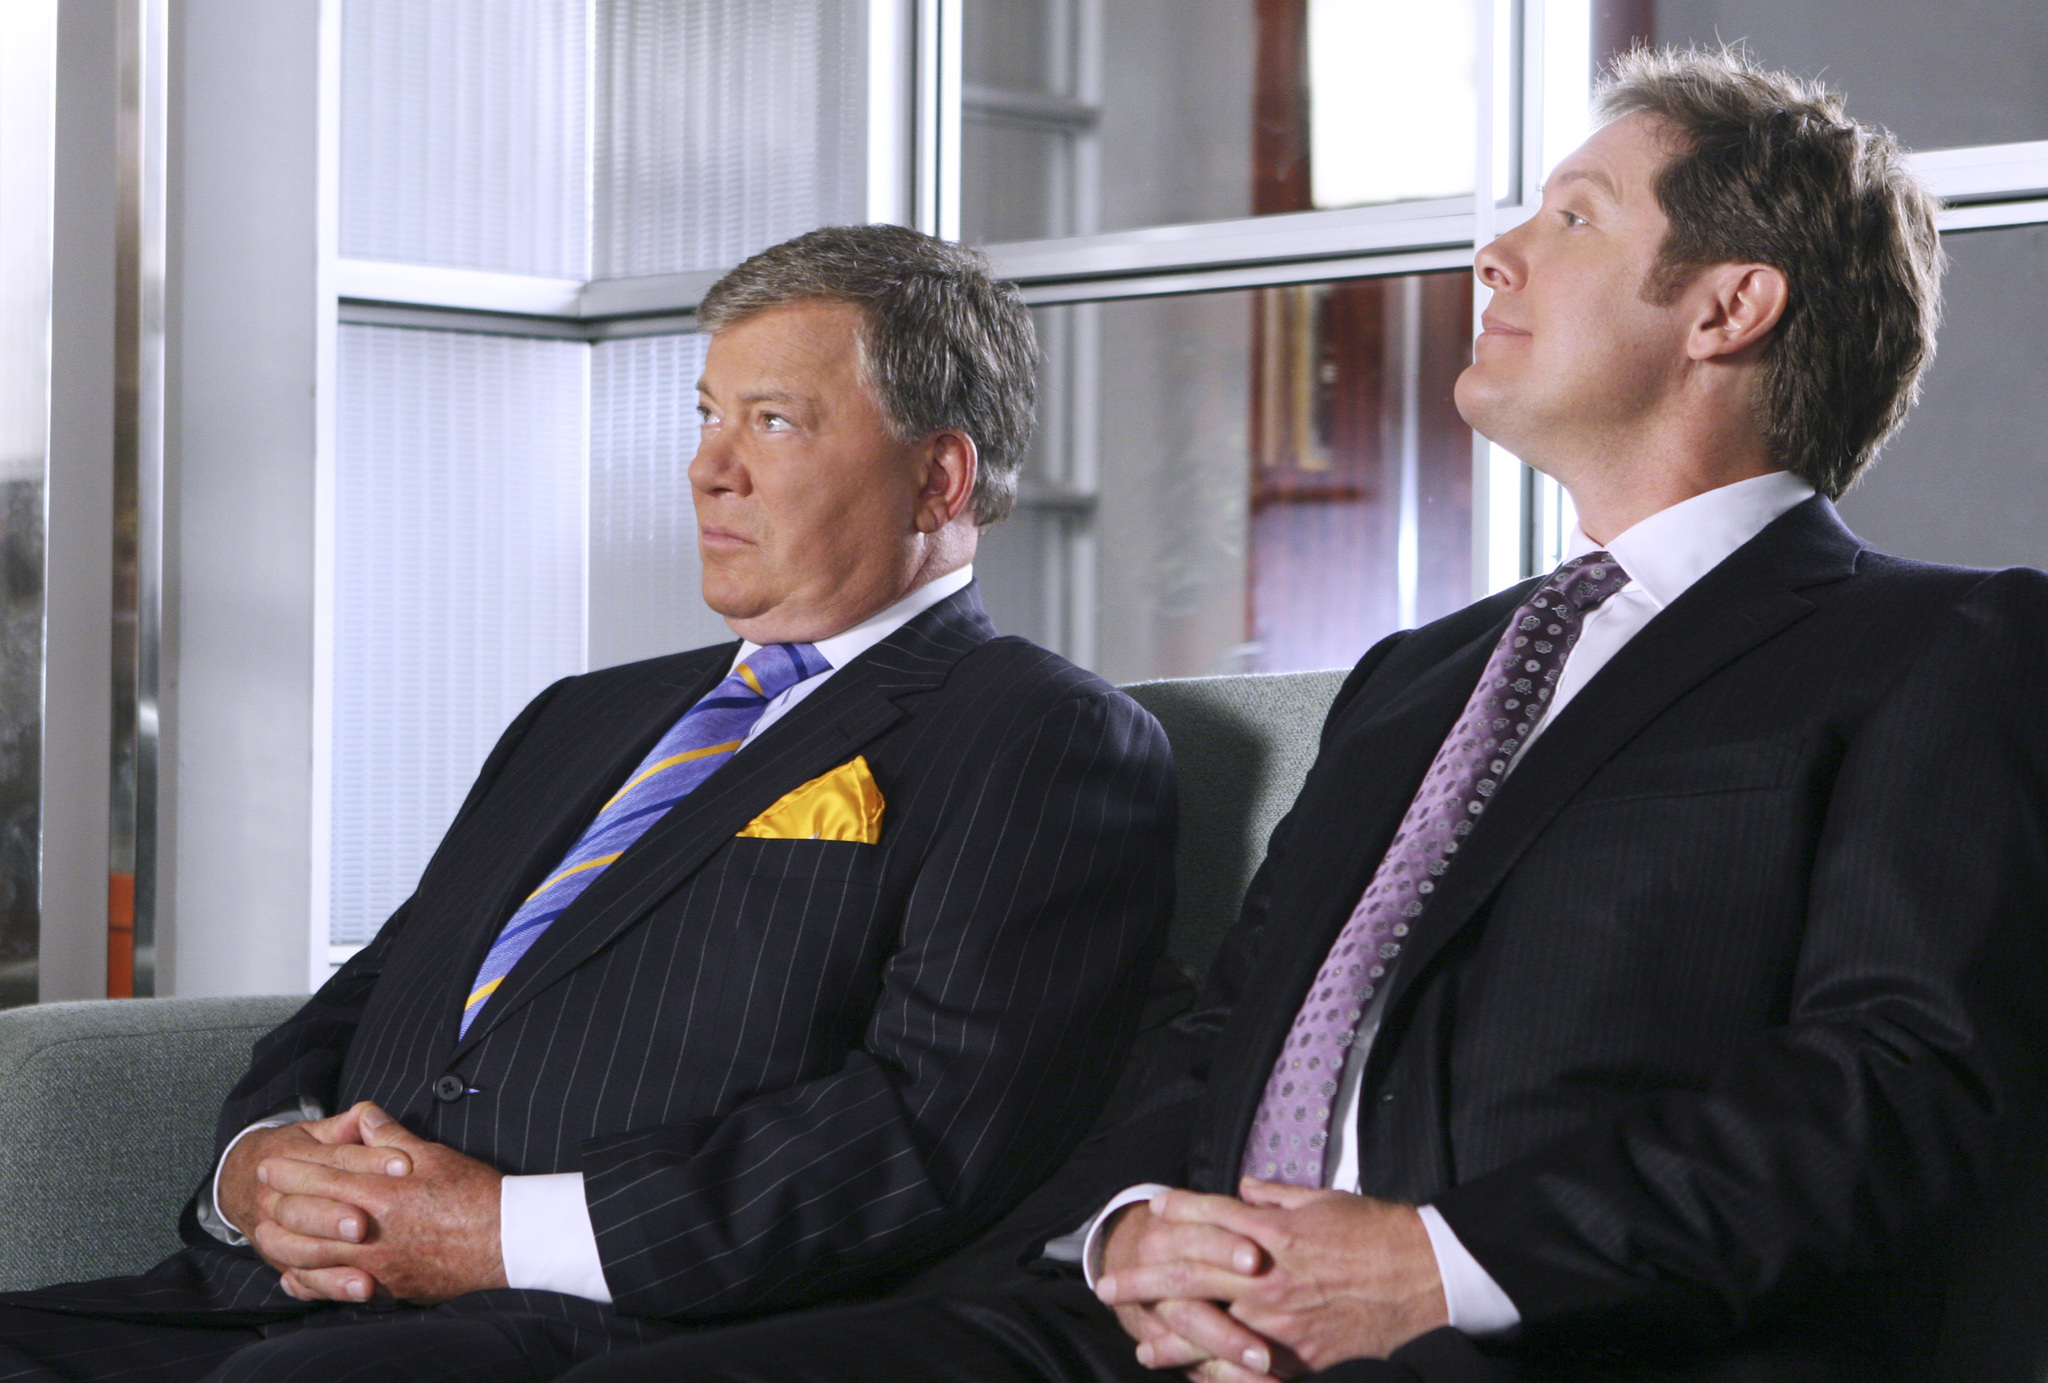 Still of William Shatner and James Spader in Boston Legal (2004)